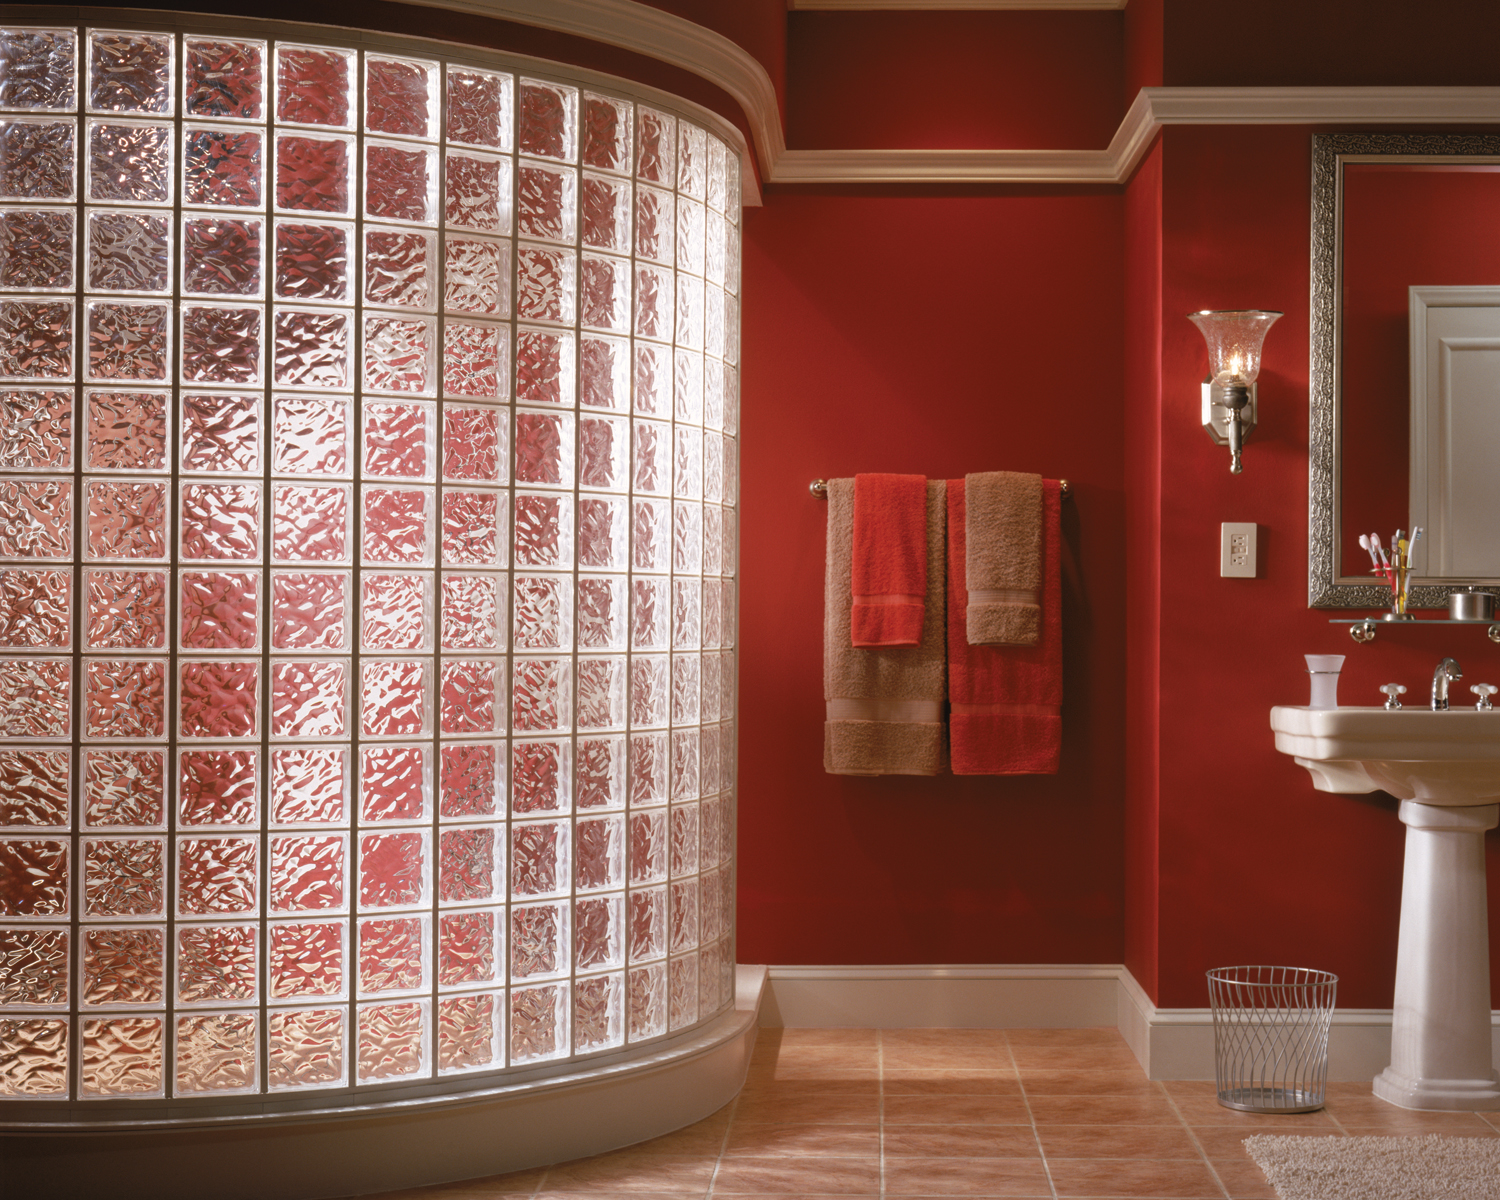 Hy-Lite Acrylic and Glass Block circular wall in bathroom